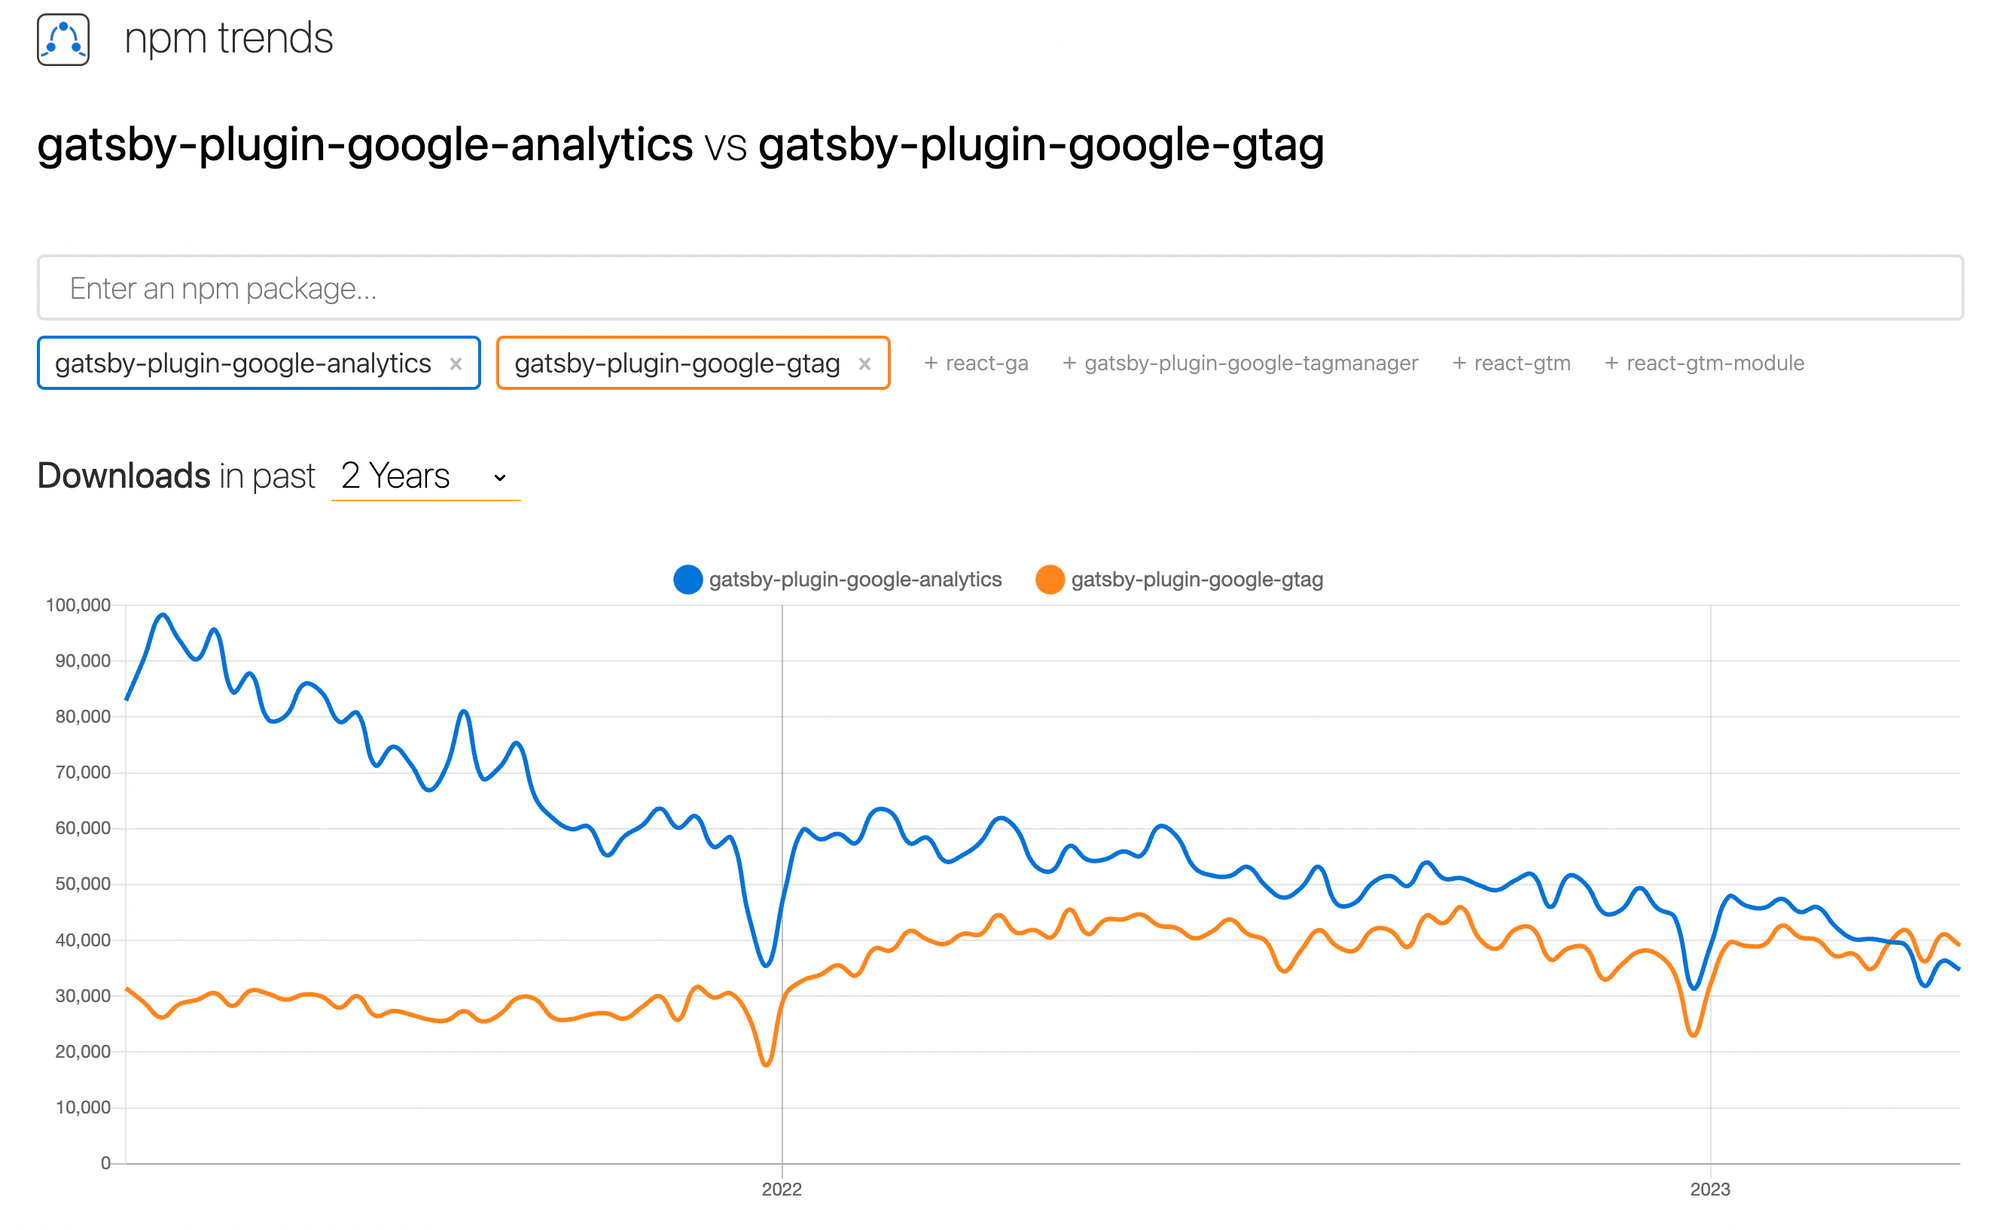  gatsby plugin google-analytics vs google gtag